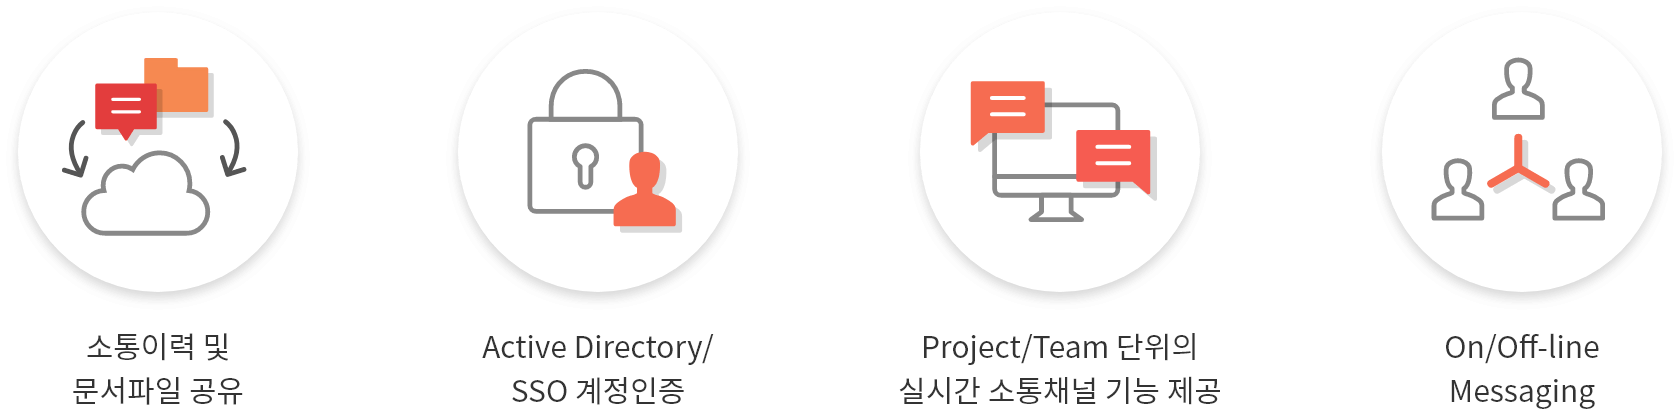 smart collabo의 새로운 업무환경제공/소통이력 및 문서파일의 공유/Active Directory,SSO 계정인증/Project,Team 단위의 실시간 소통채널 기능 제공/On,Off-line Messaging